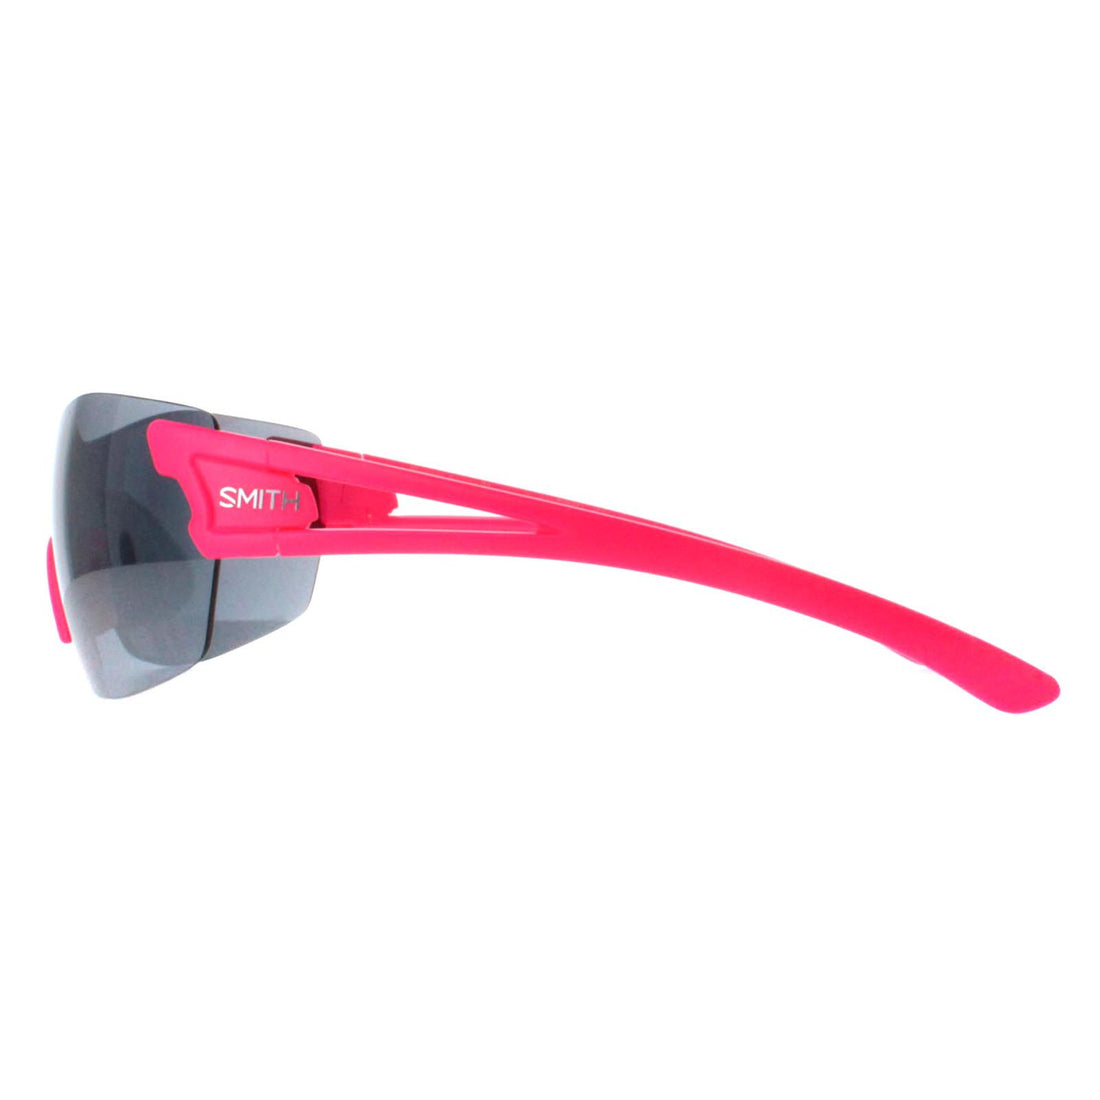 Smith Sunglasses Pivlock Asana/N 67T Pink Silver